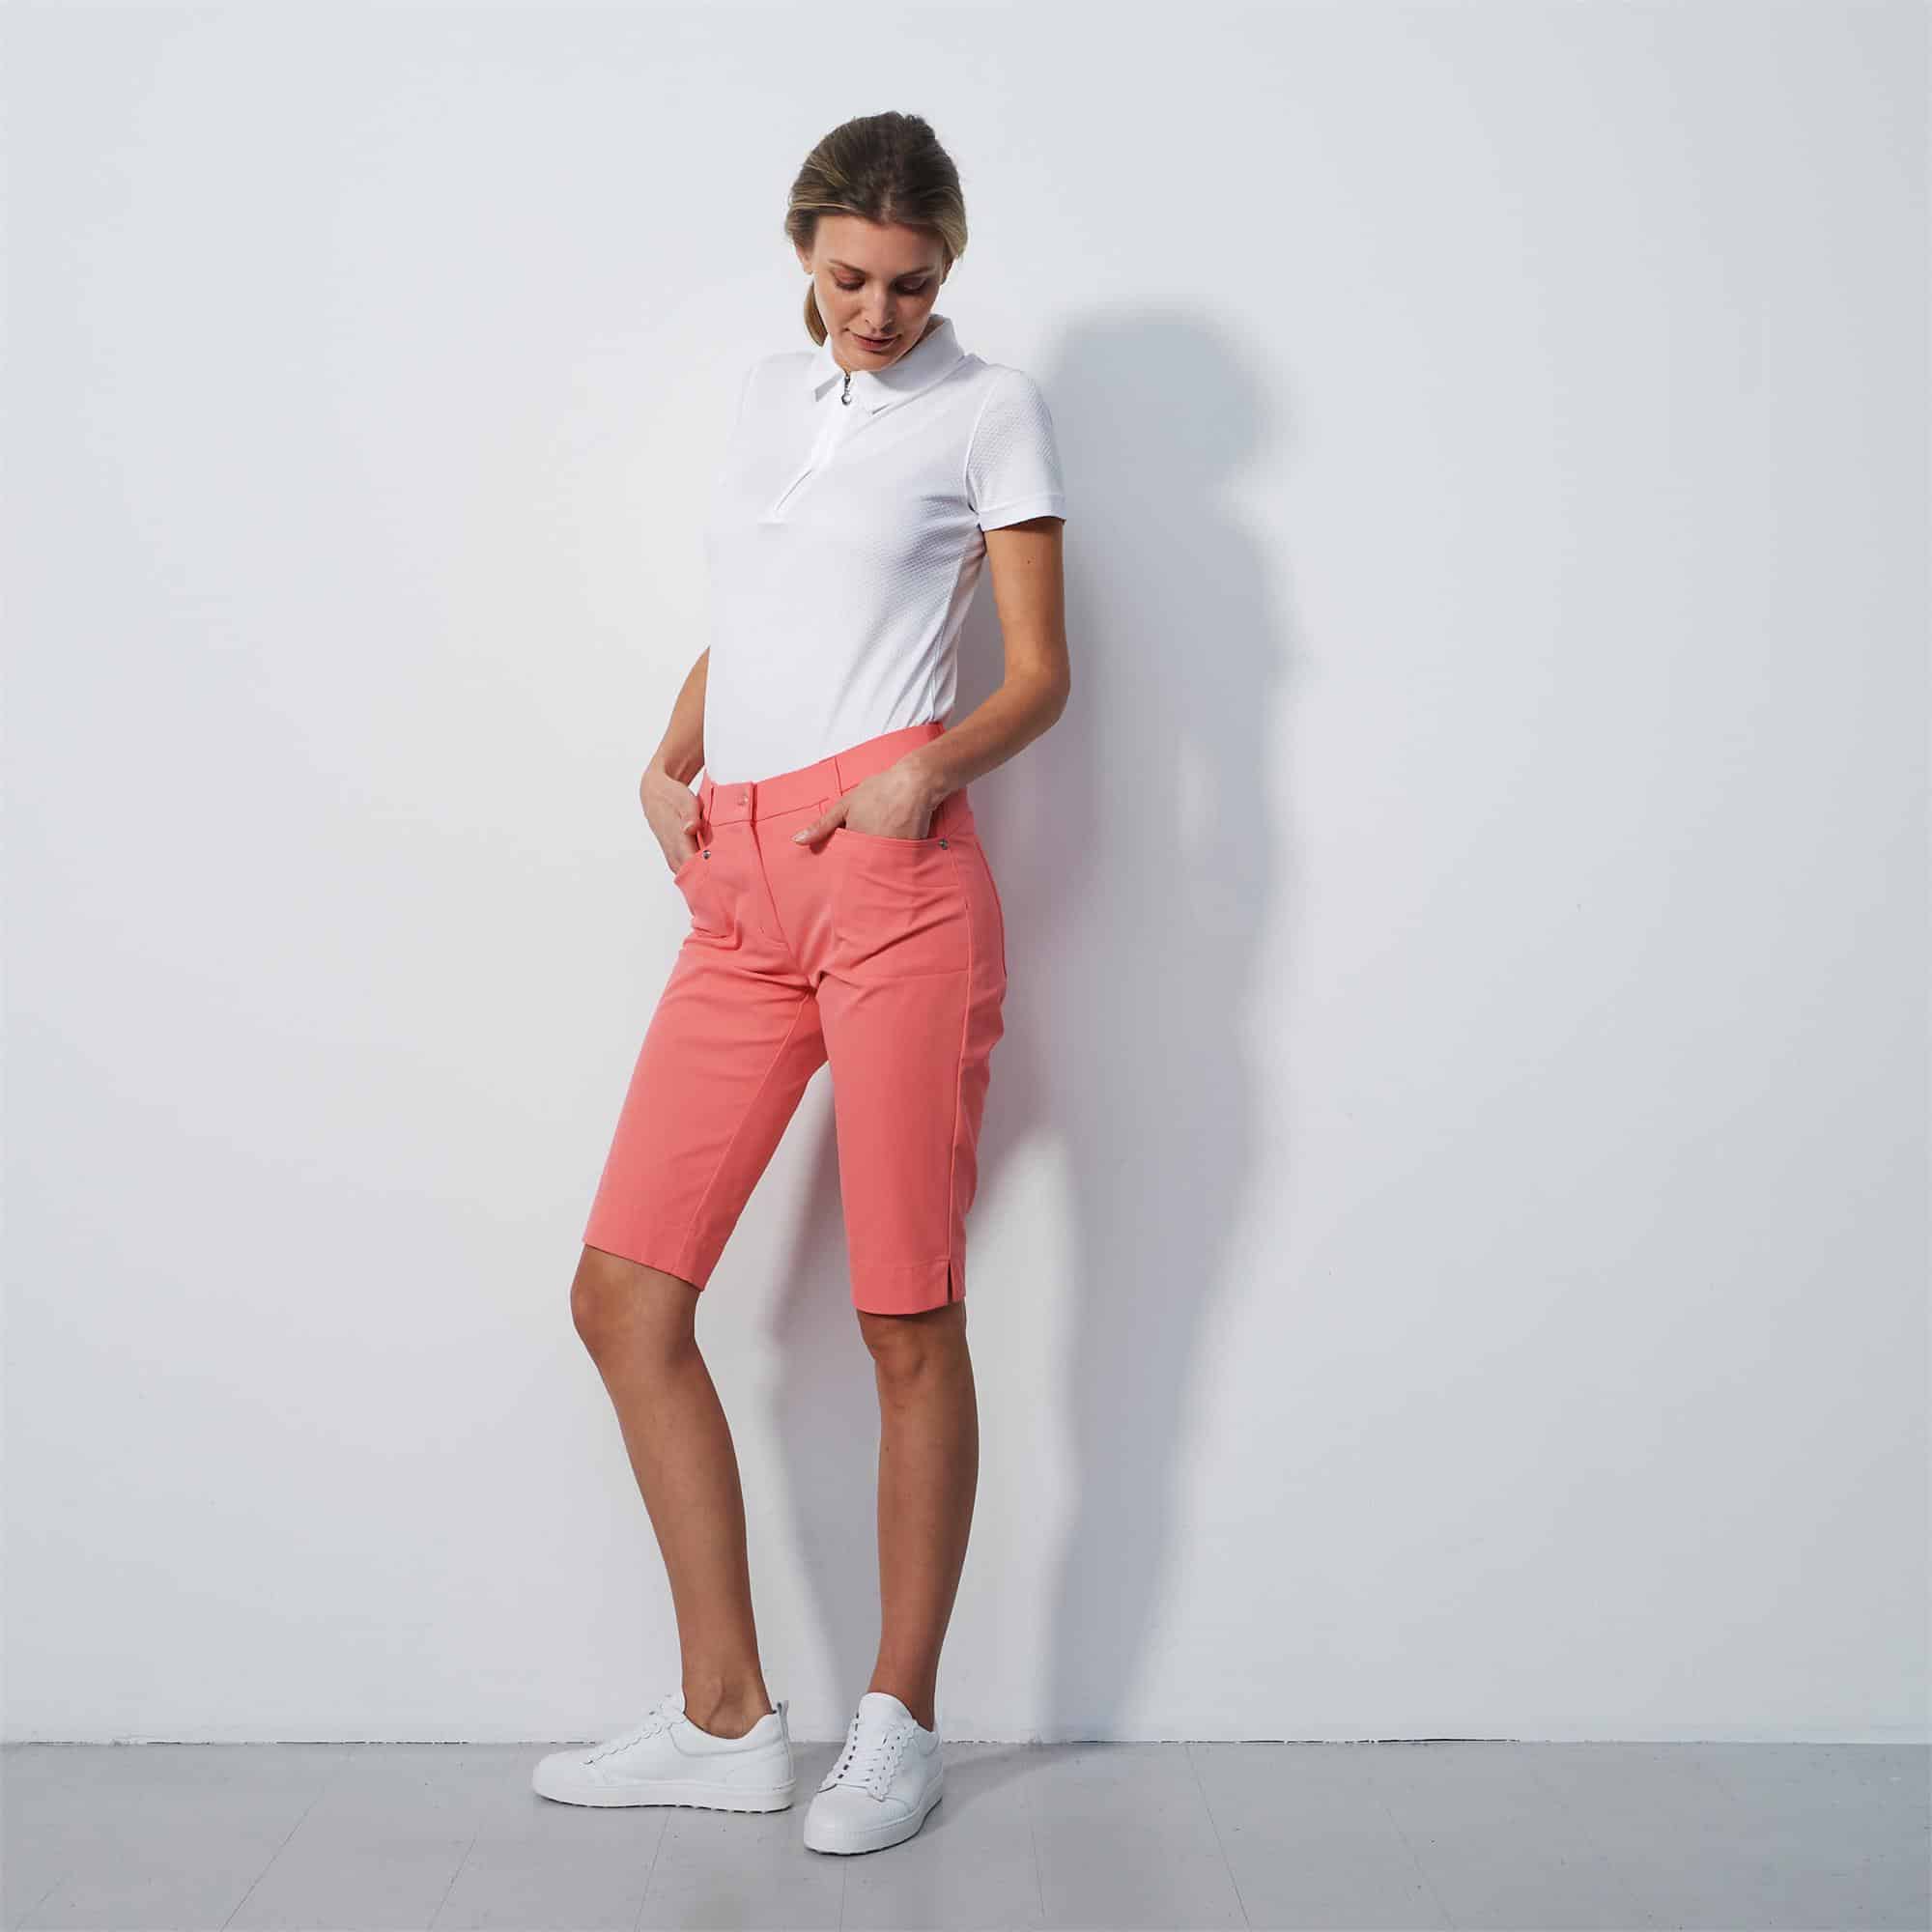 Daily Sports Lyric Ladies Golf City Shorts Coral 62cm